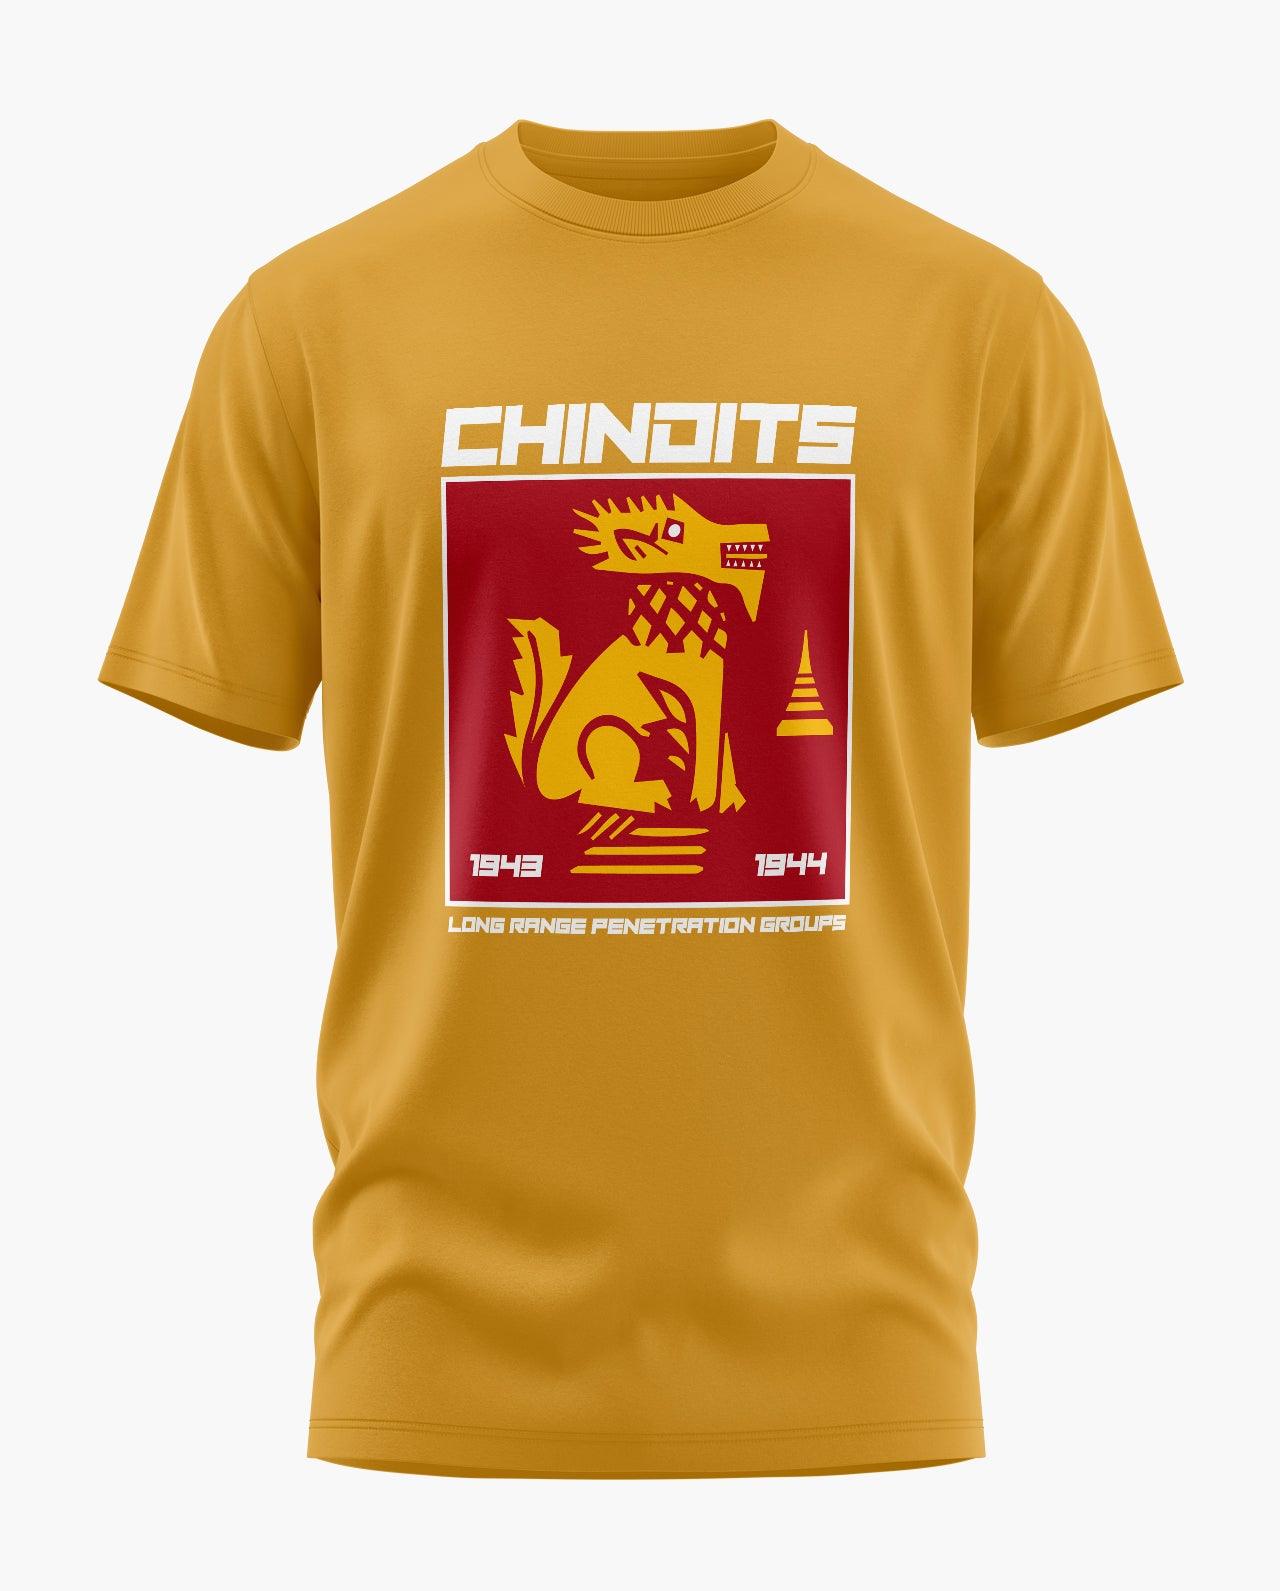 The Chindits T-Shirt - Aero Armour